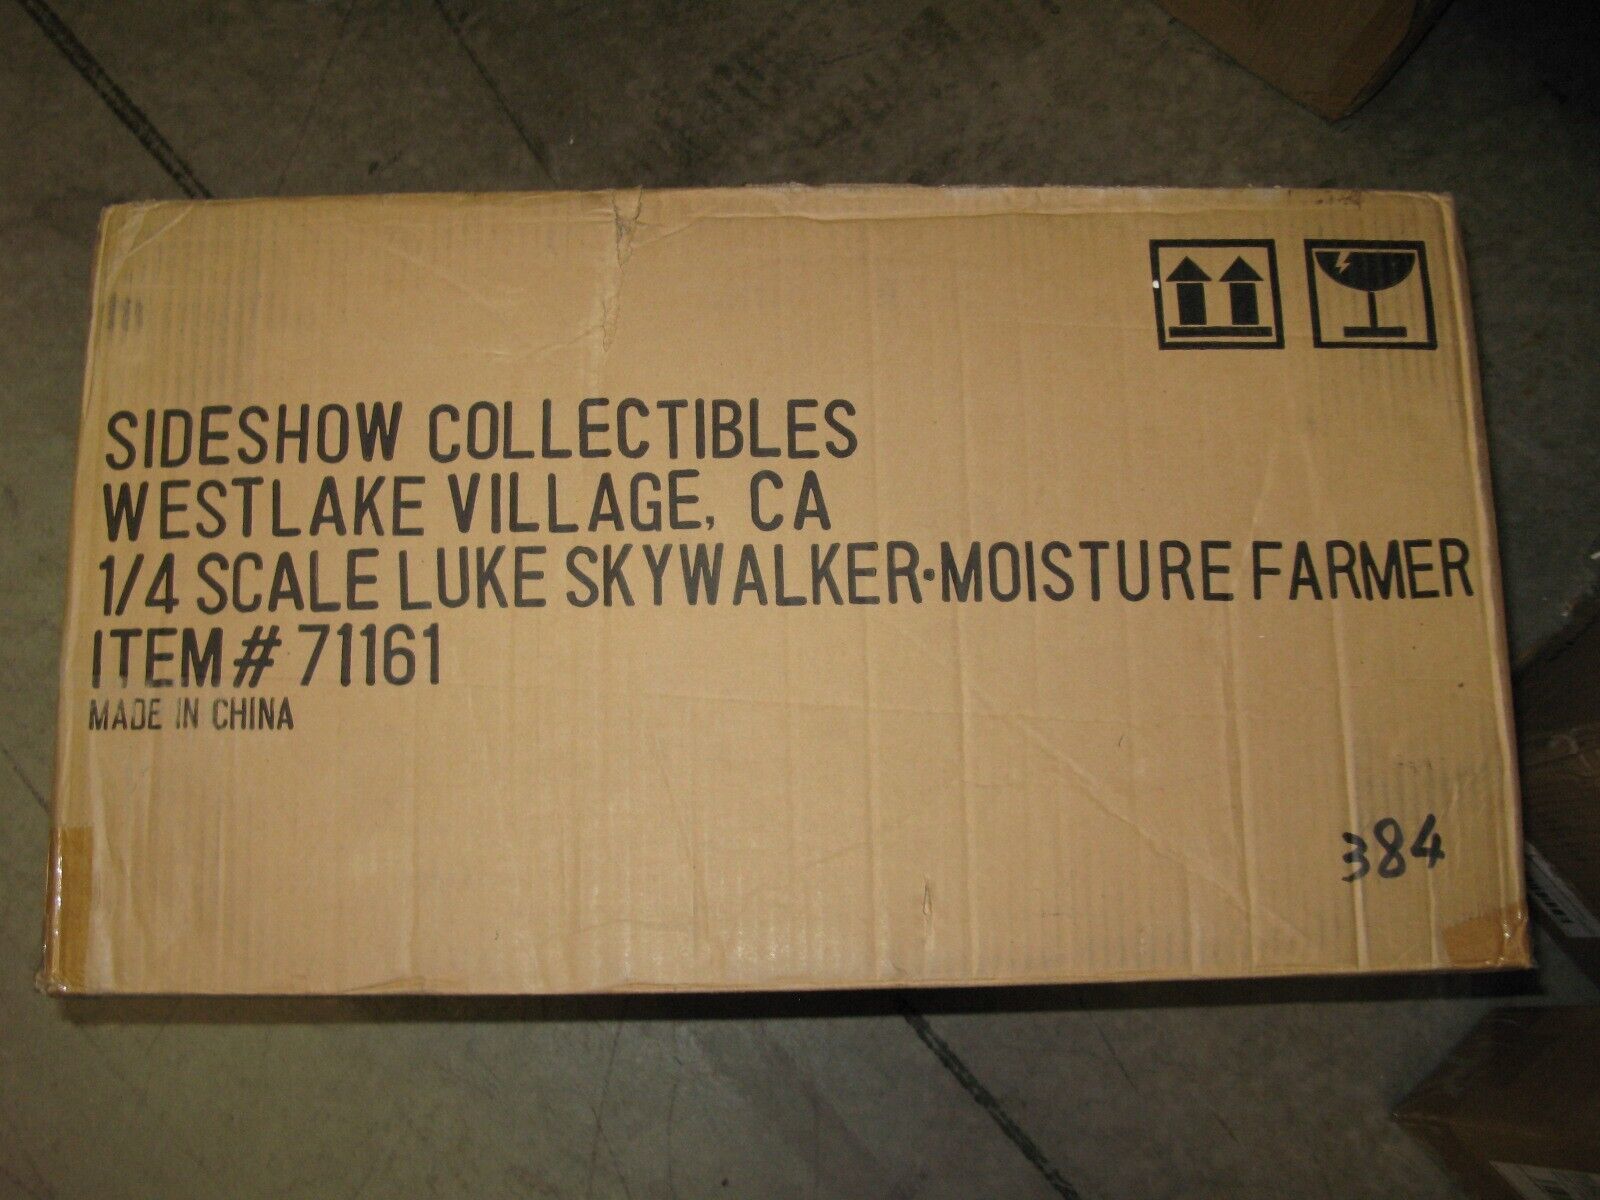 Star Wars Tatooine Luke Skywalker Statue 2005 San Diego Comic Con Sealed in Box - $3,900.00